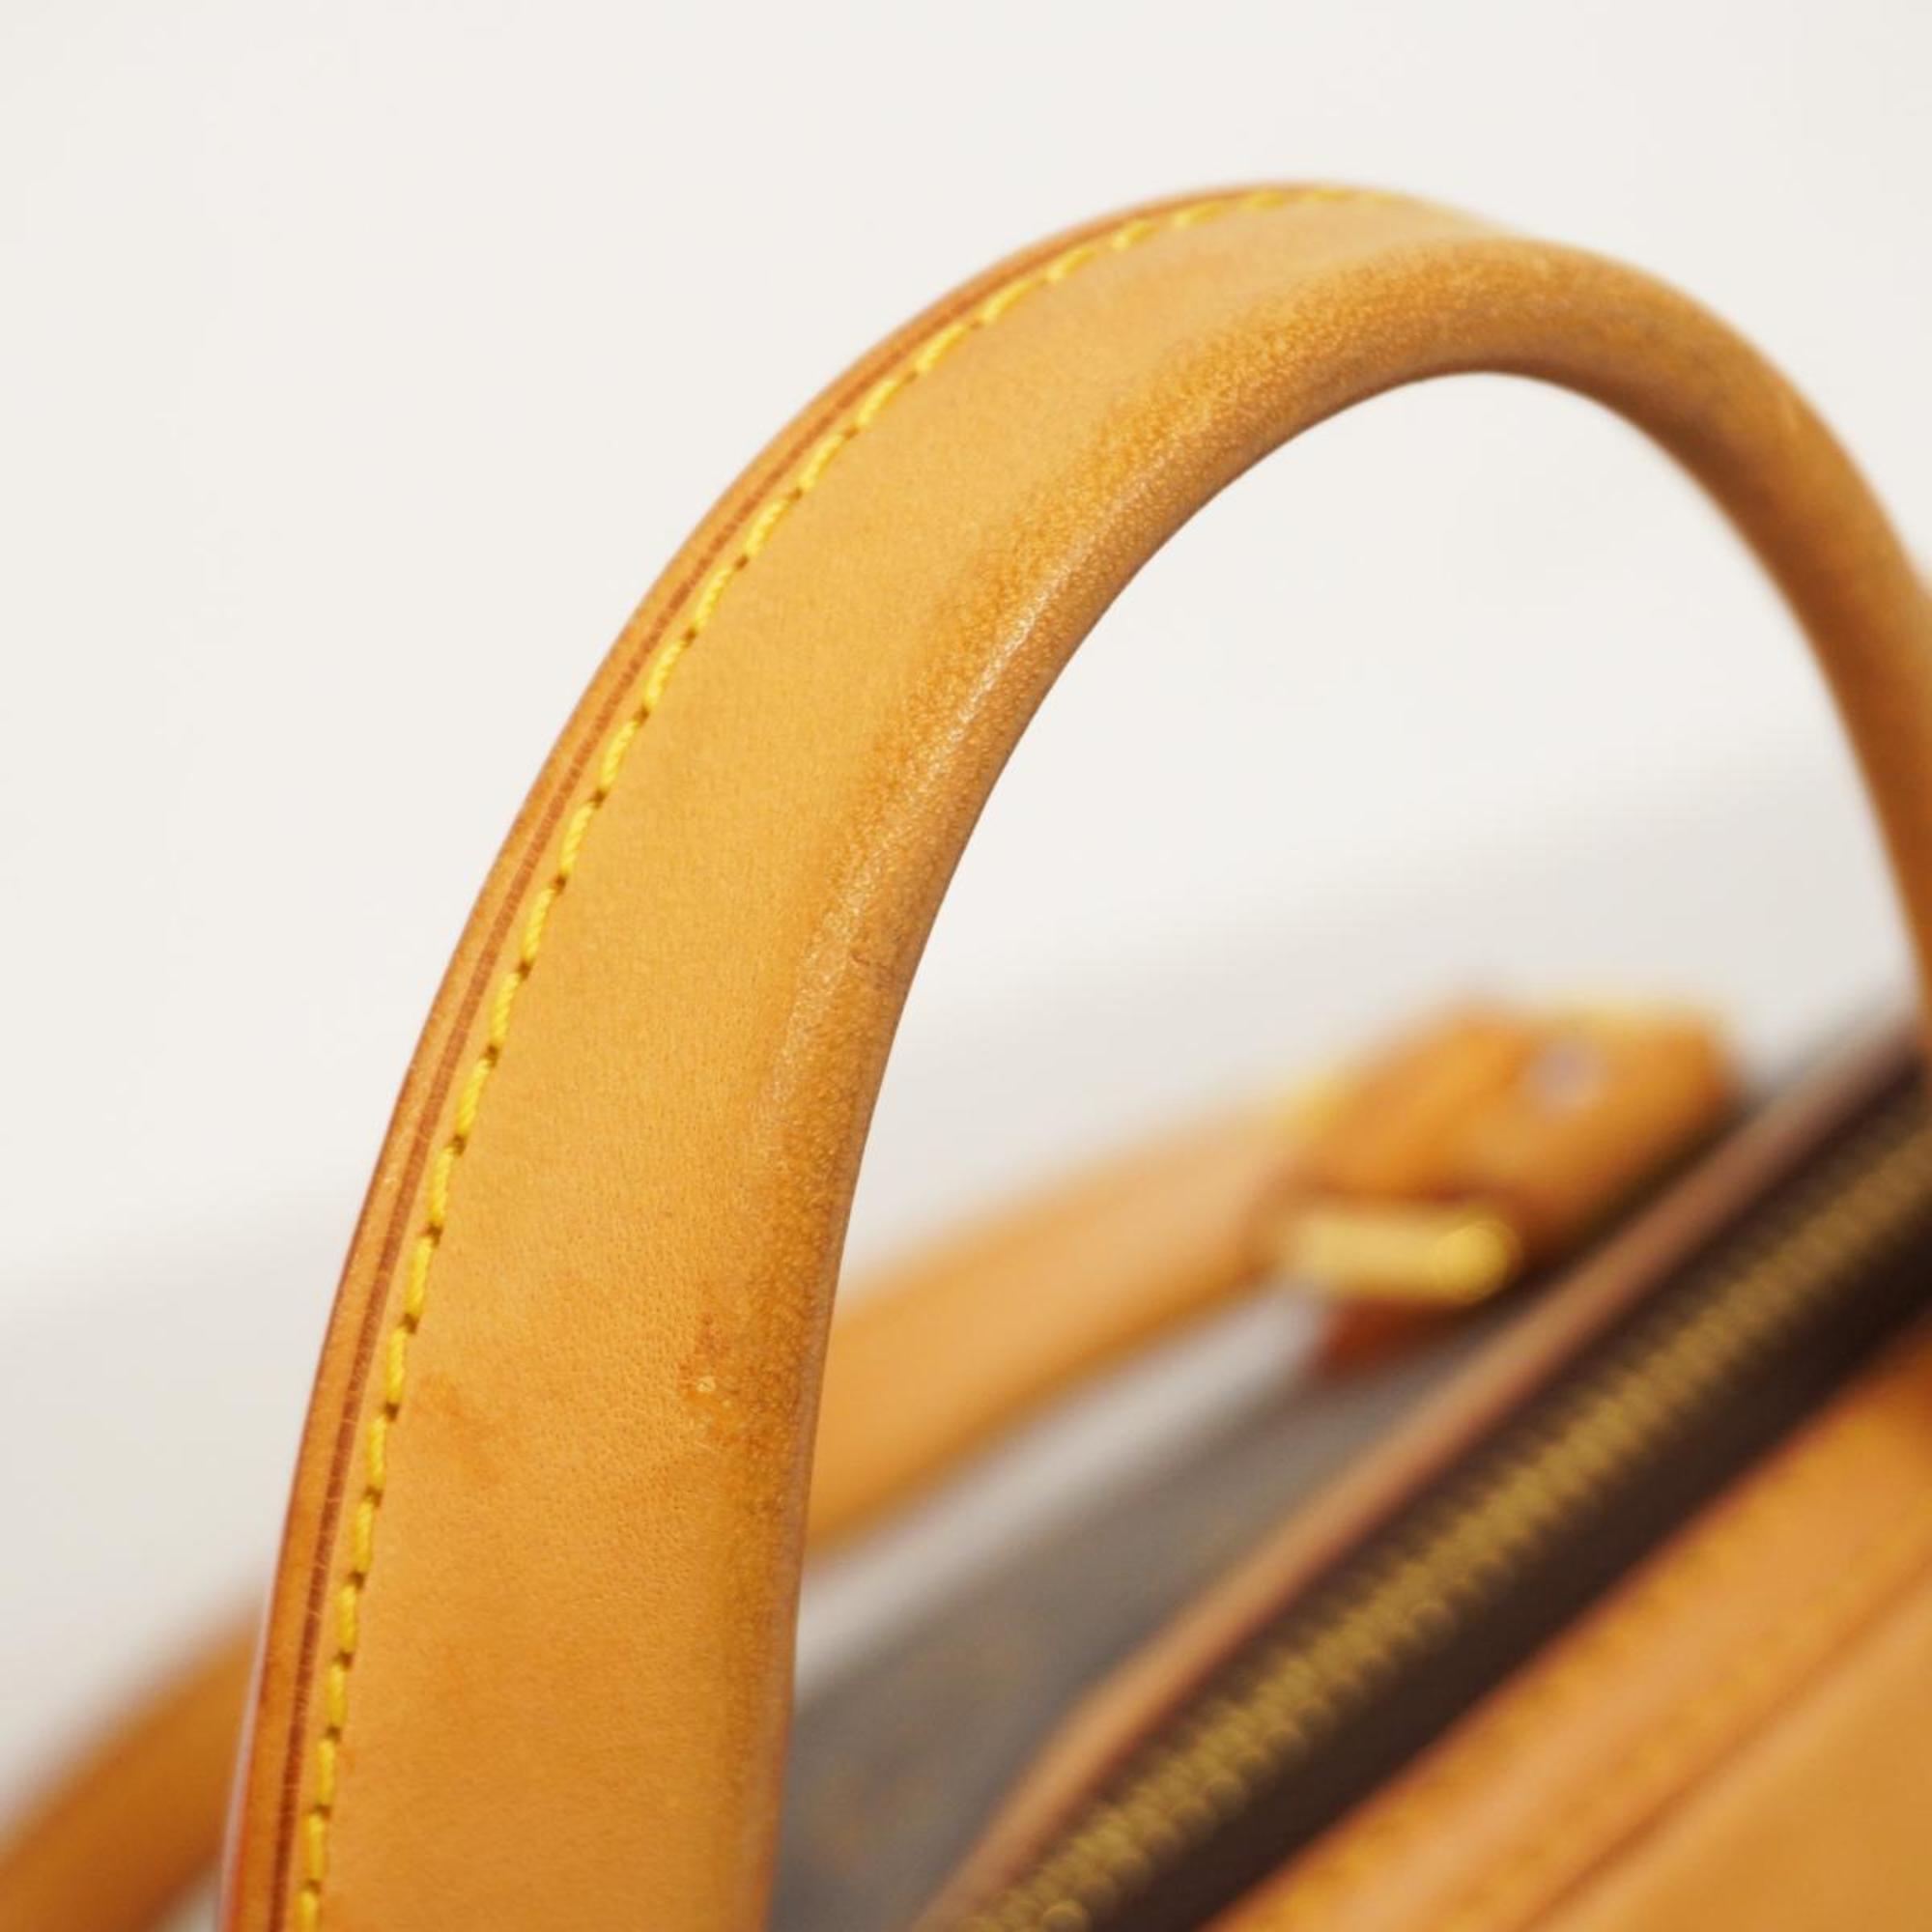 Louis Vuitton Handbag Monogram Retiro PM M40325 Brown Ladies